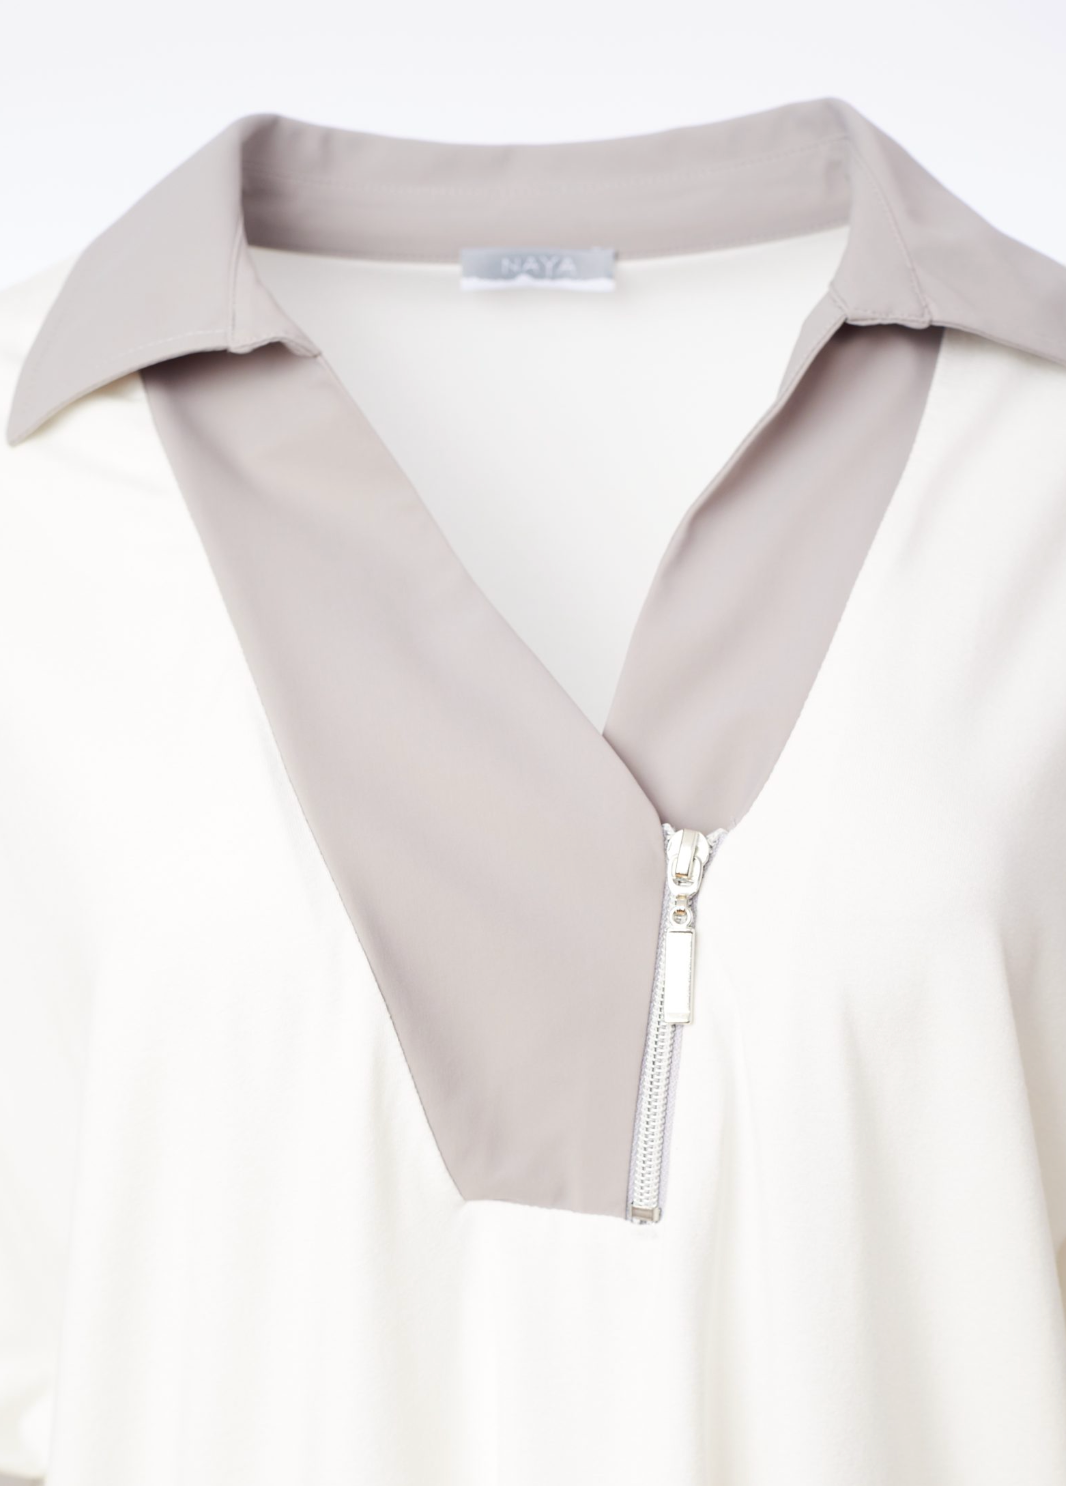 Jersey with Zip Detail Top/Collar